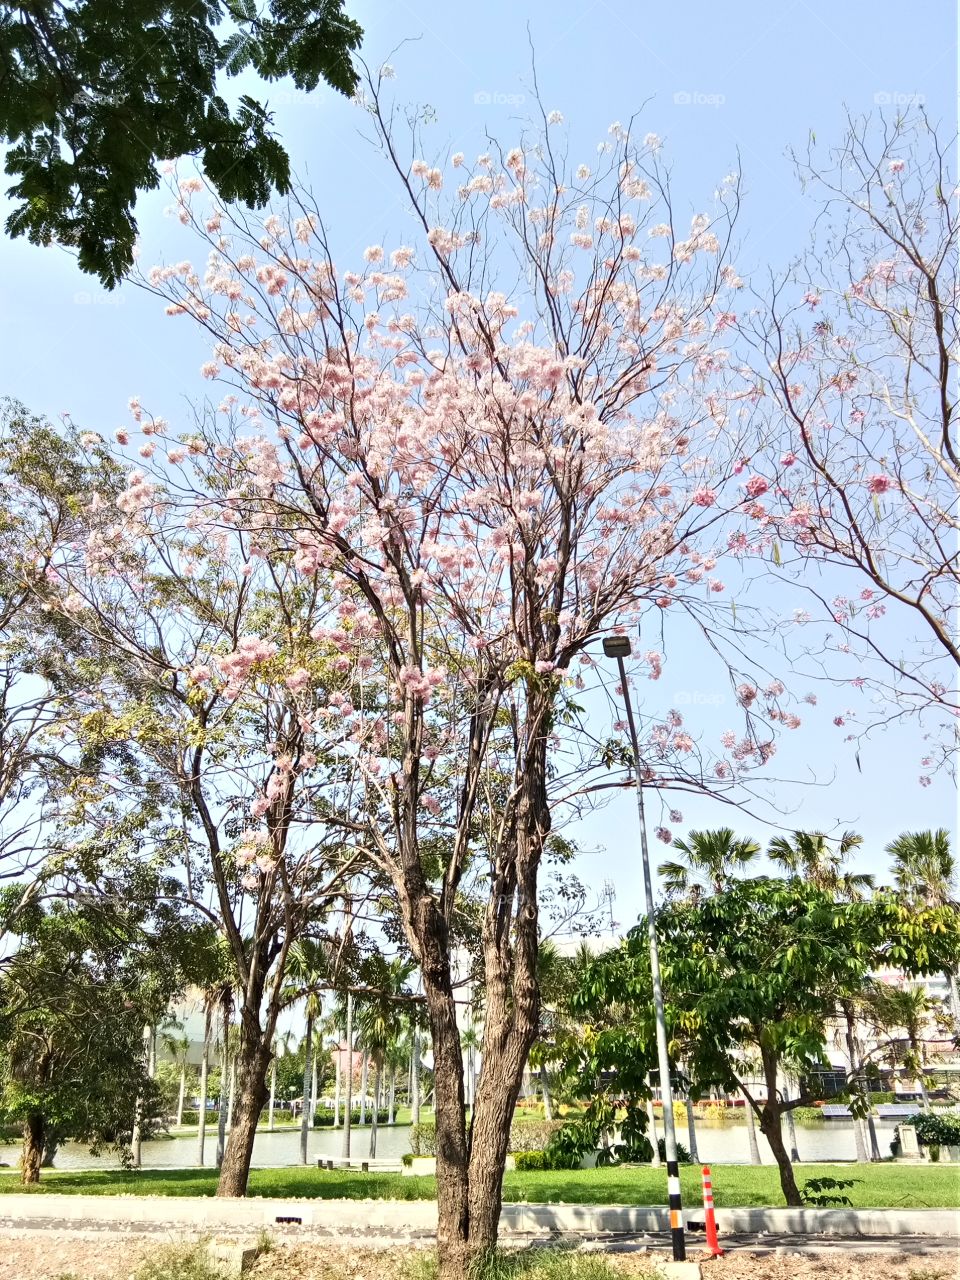 tree
sakura flower
beautiful 
flower
flora
lily
green
nature
thailand